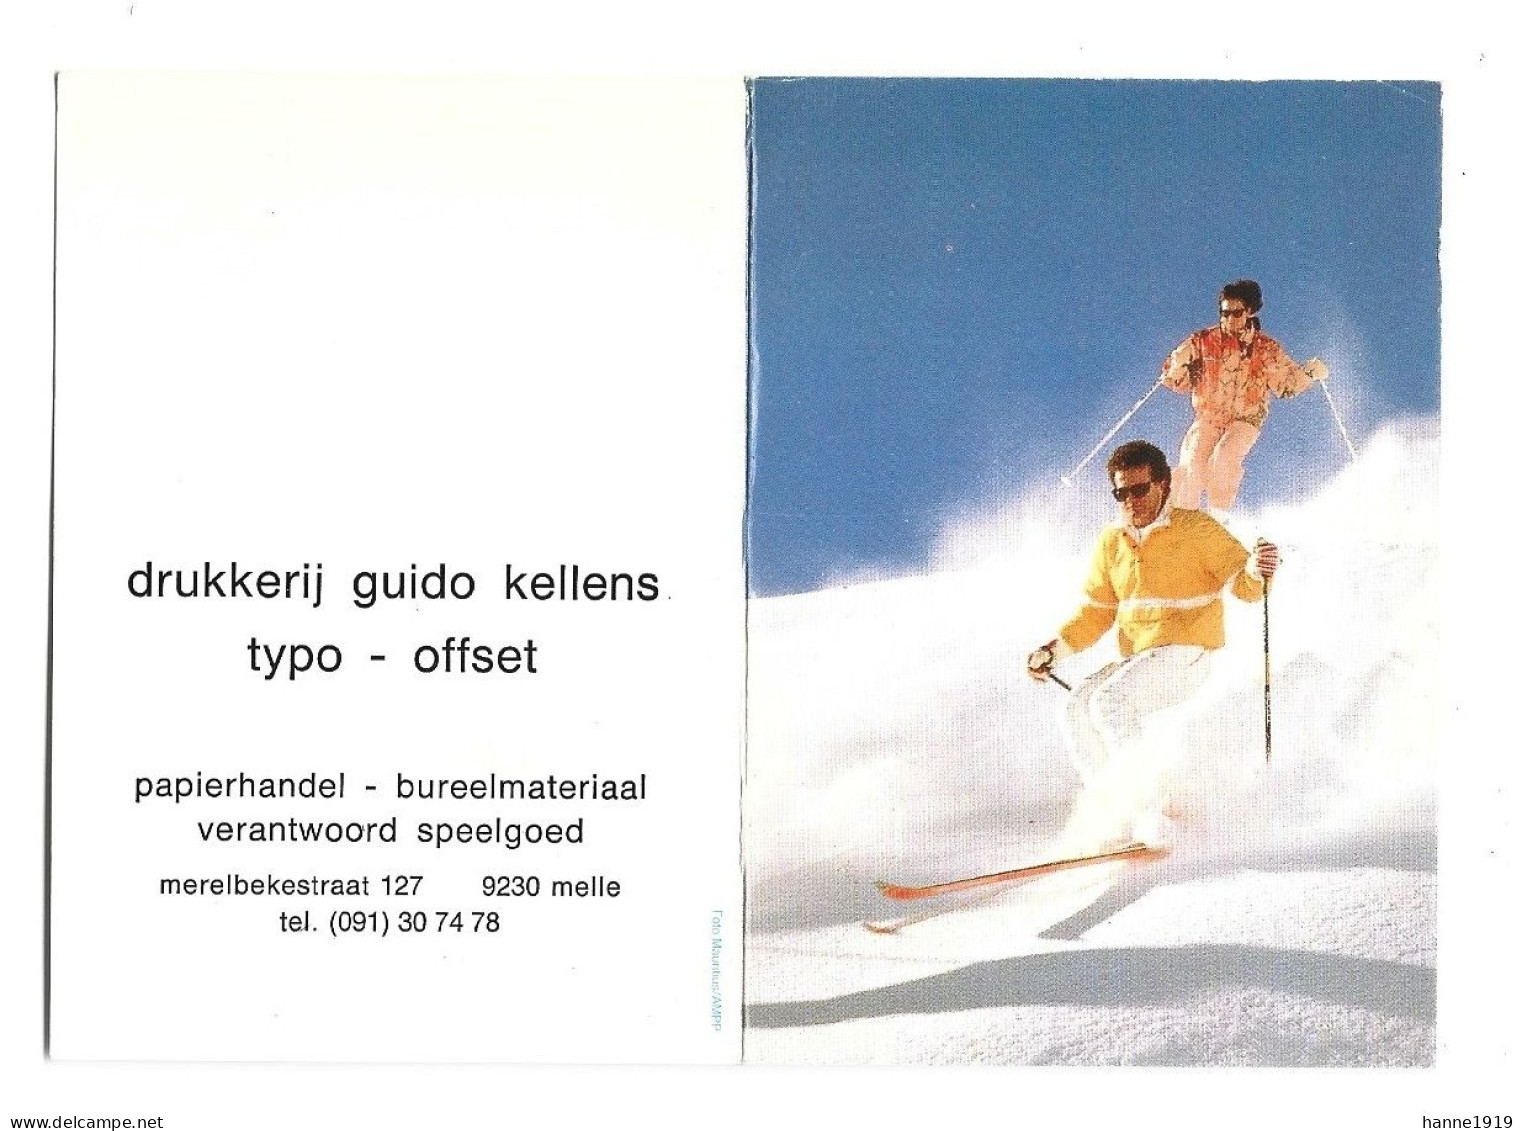 Melle Merelbekestraat Drukkerij Guido Kellens Kalender 1990 Calendrier Htje - Small : 1981-90